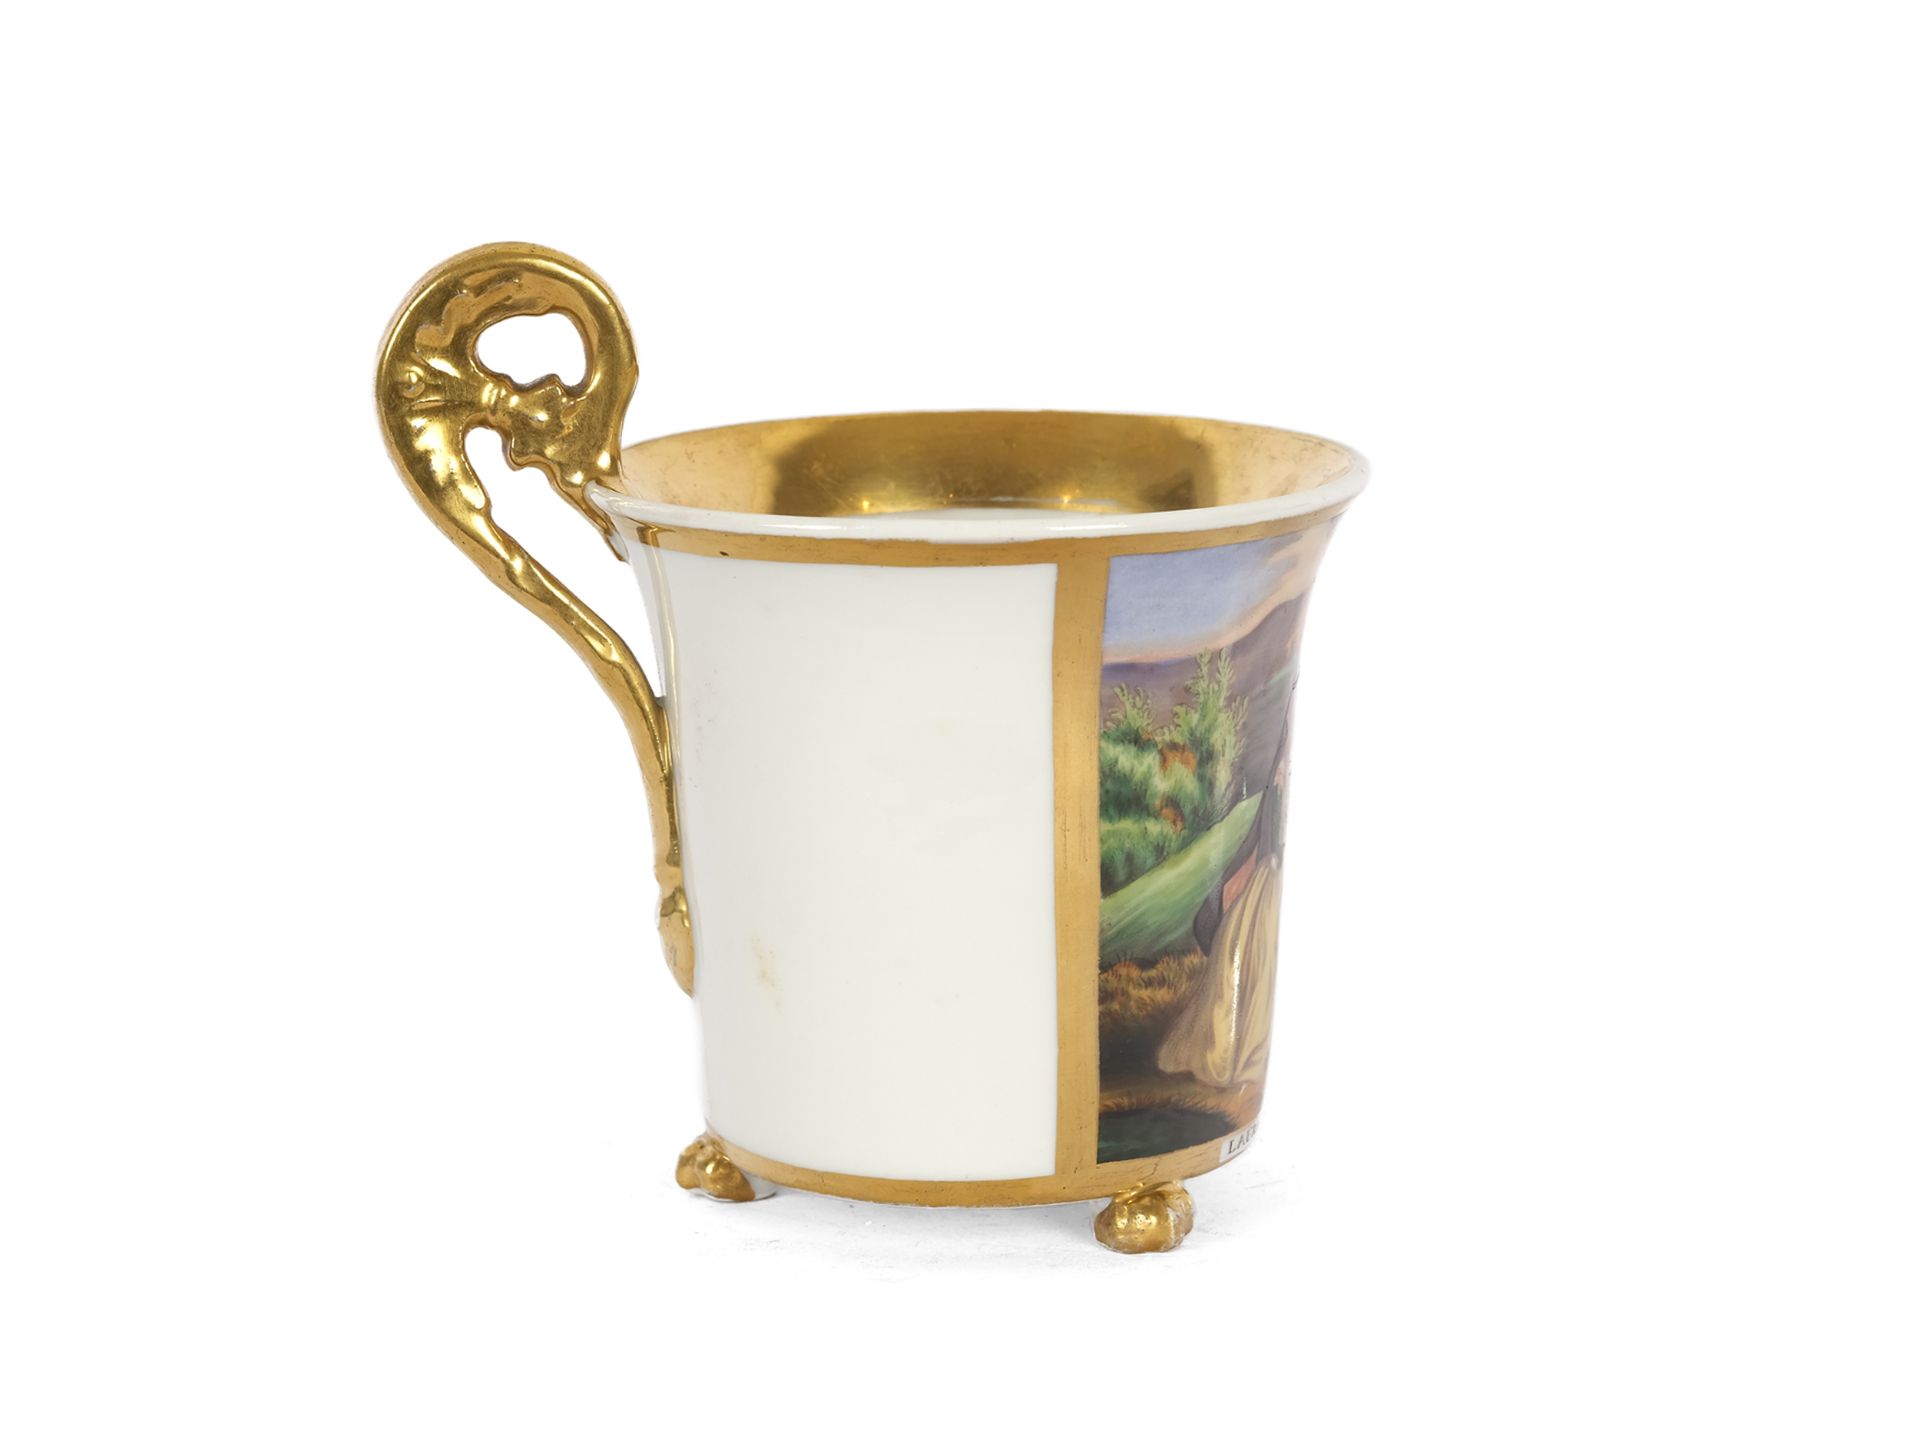 Cocoa cup, Laura et Petrarca, Biedermeier, around 1830/40 - Image 3 of 3